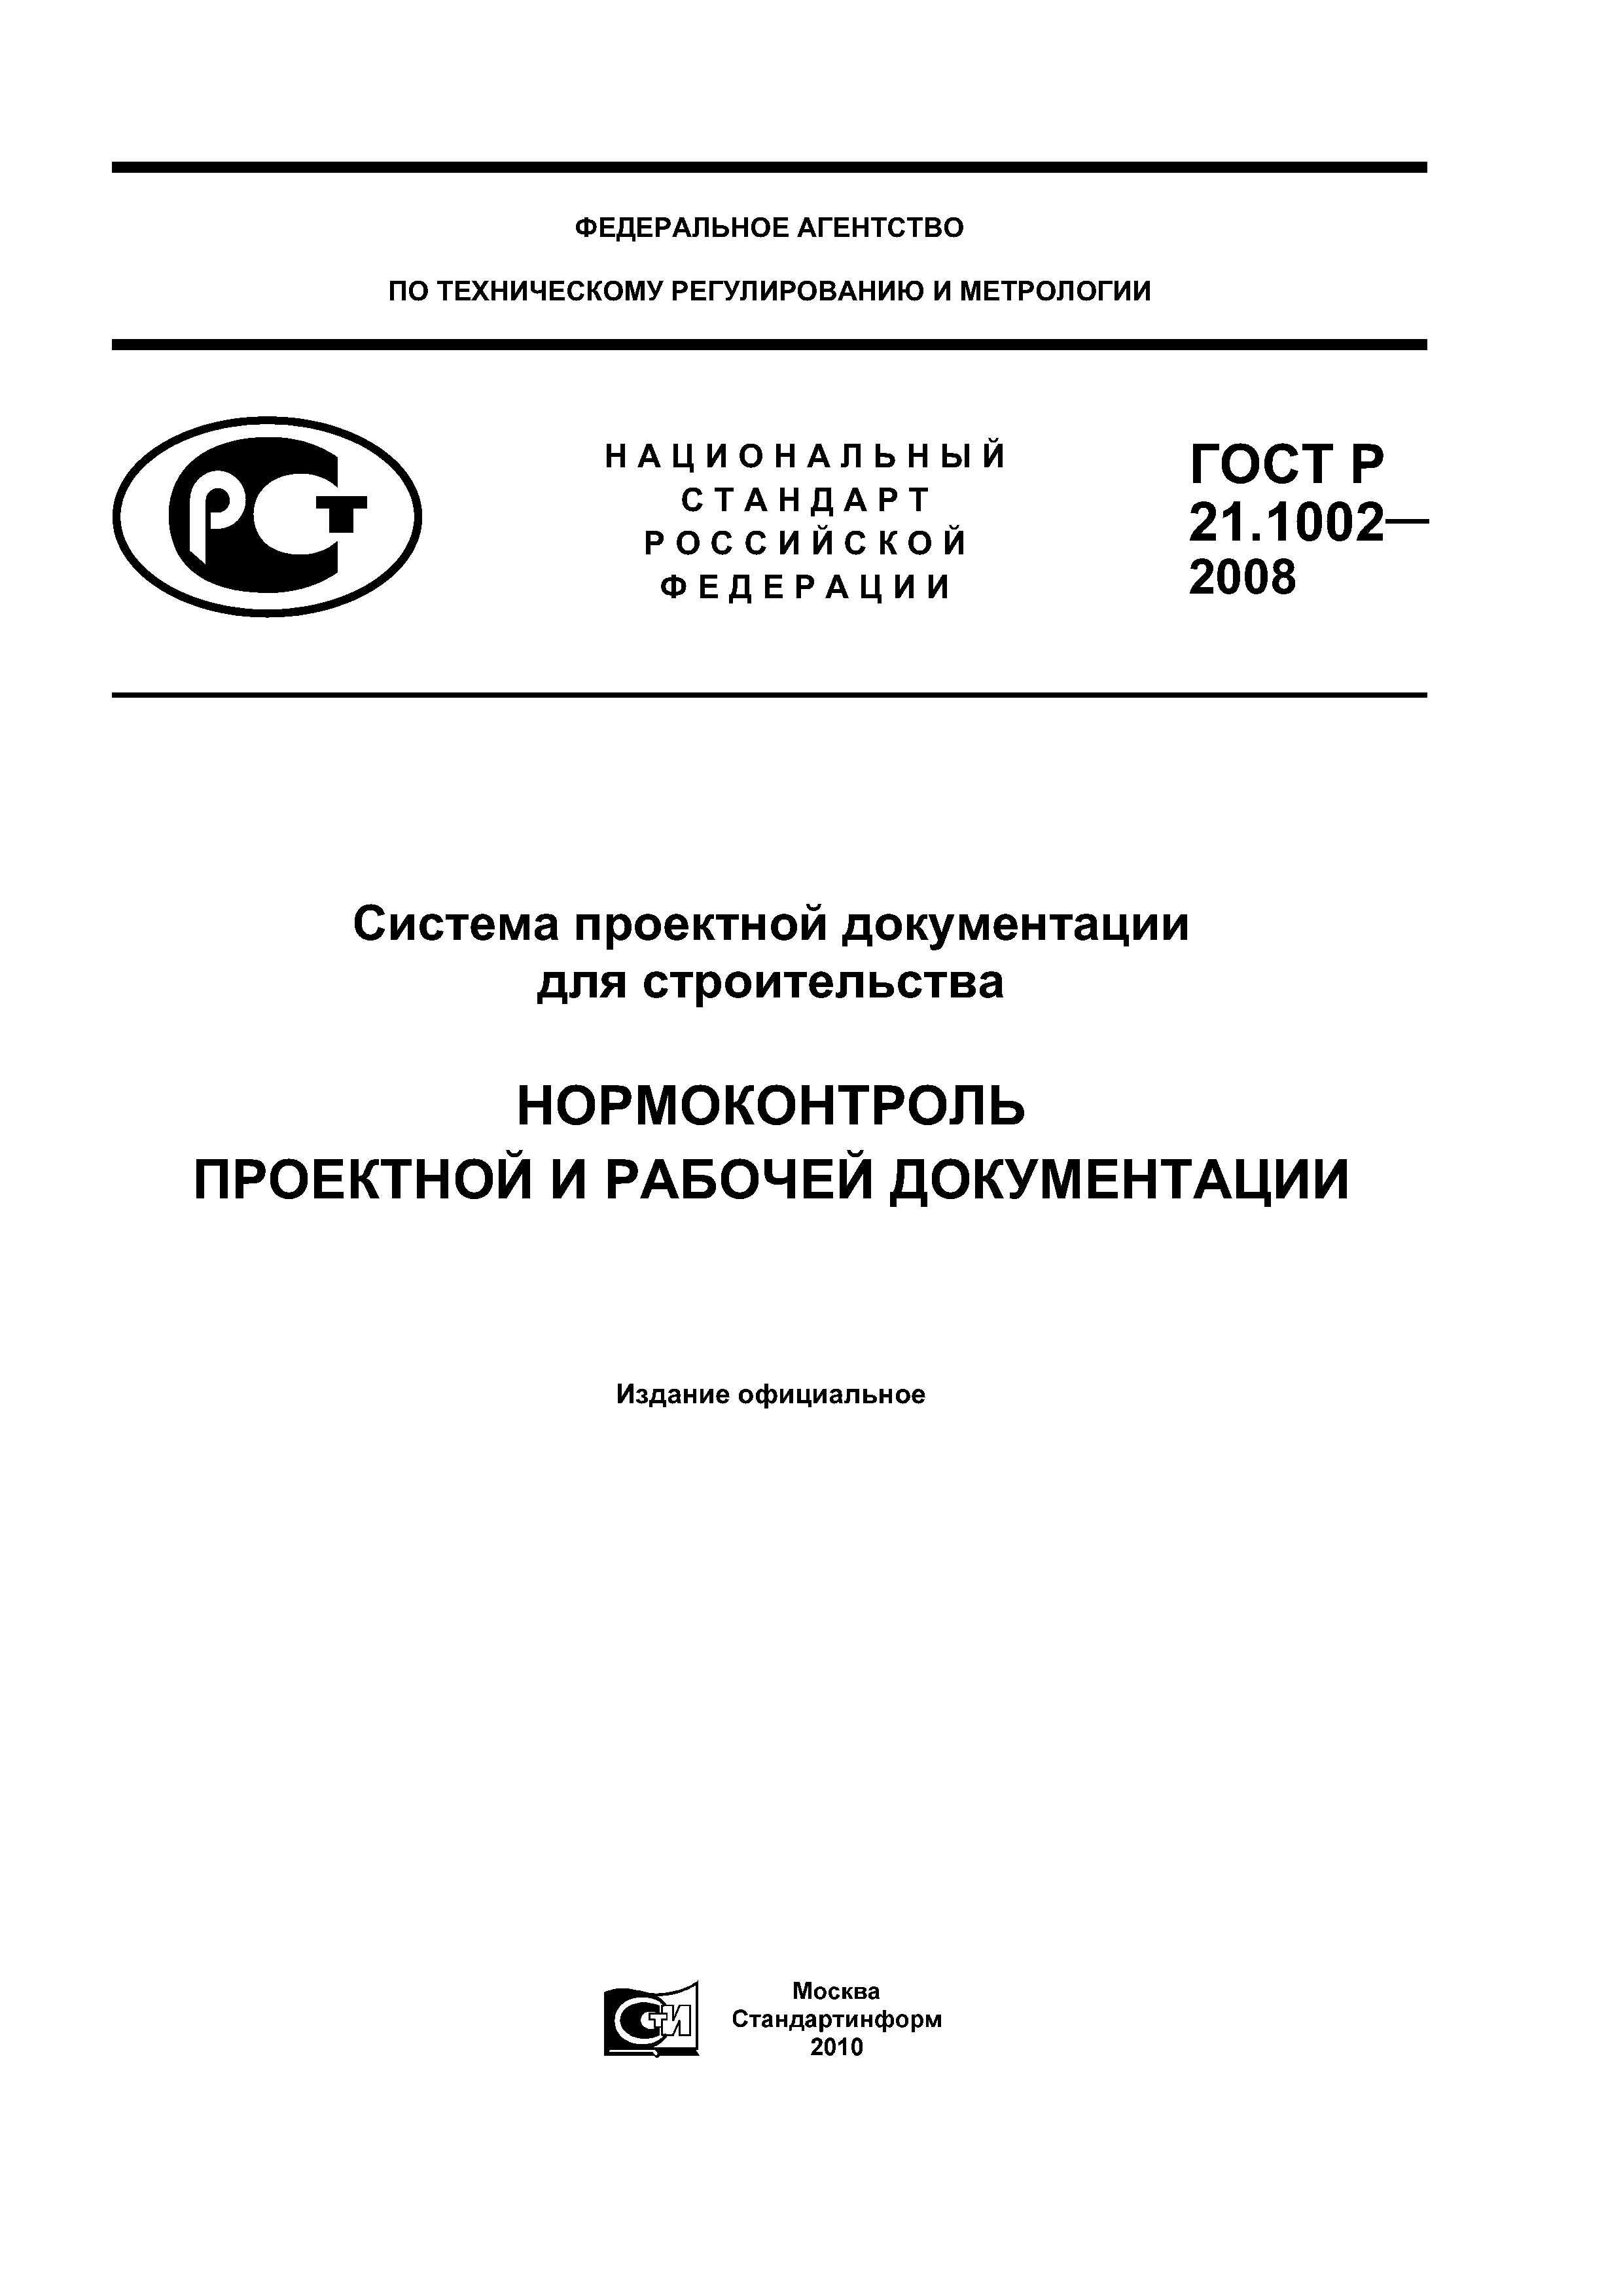 ГОСТ Р 21.1002-2008